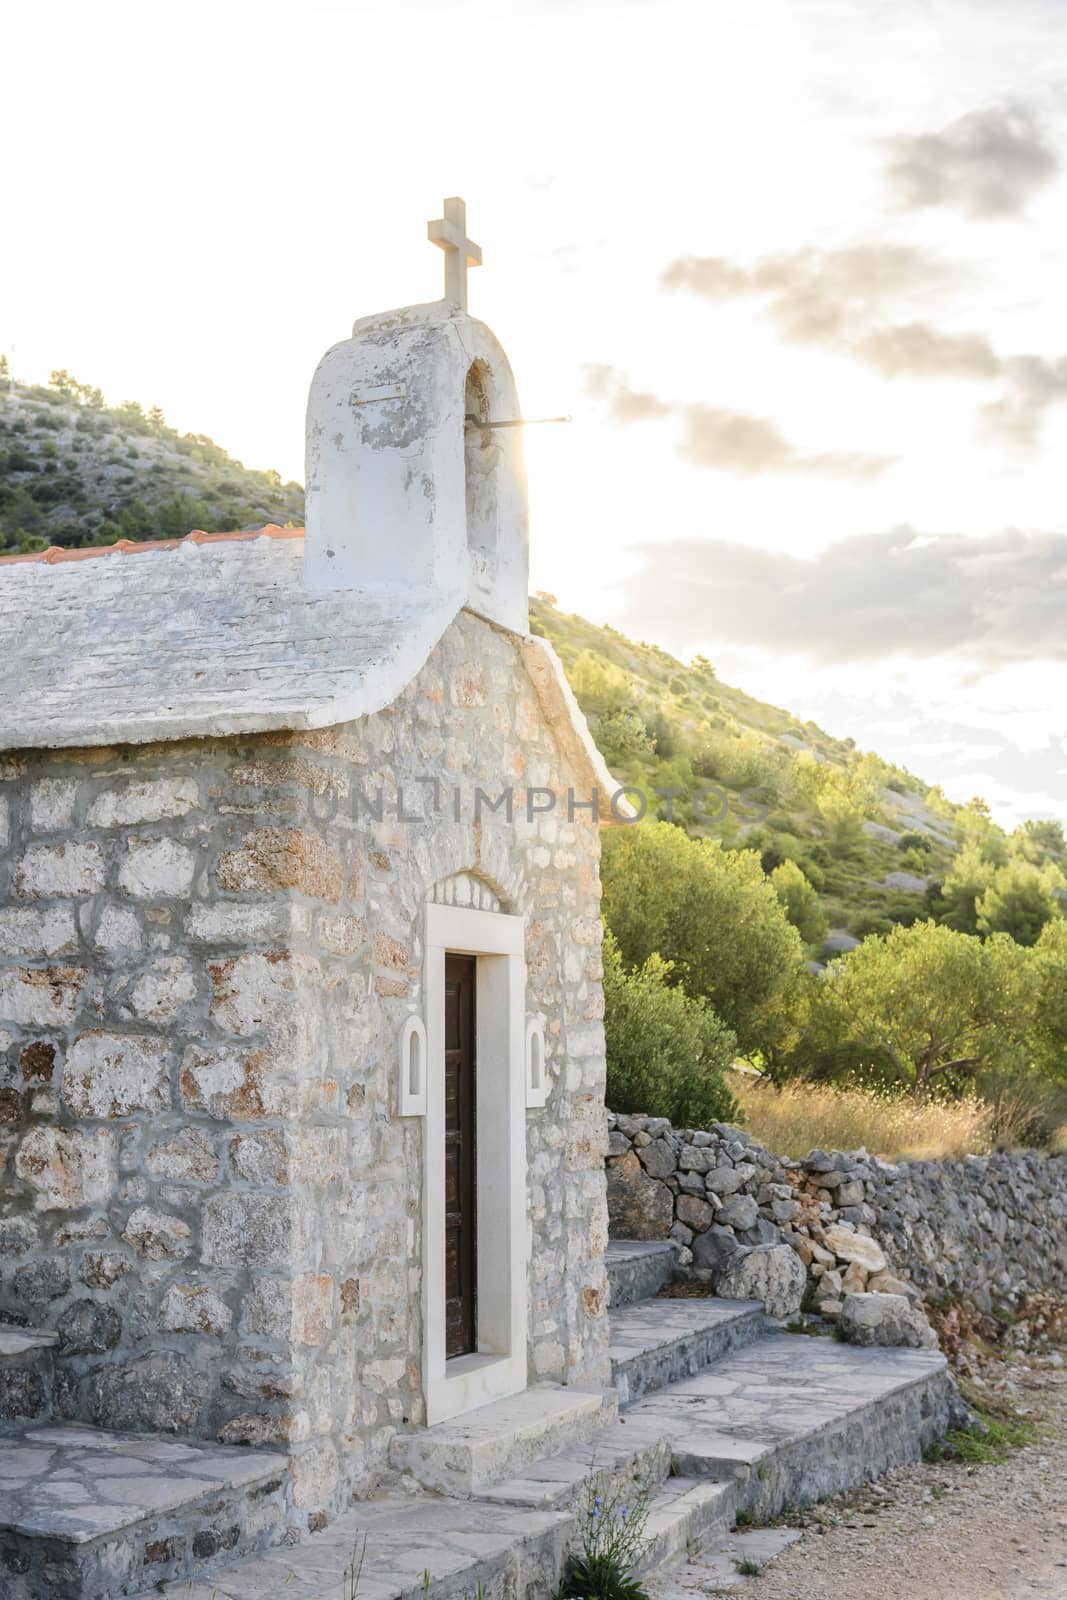 Small stone chappel in the Mediterranean, island of Brac, Croati by asafaric